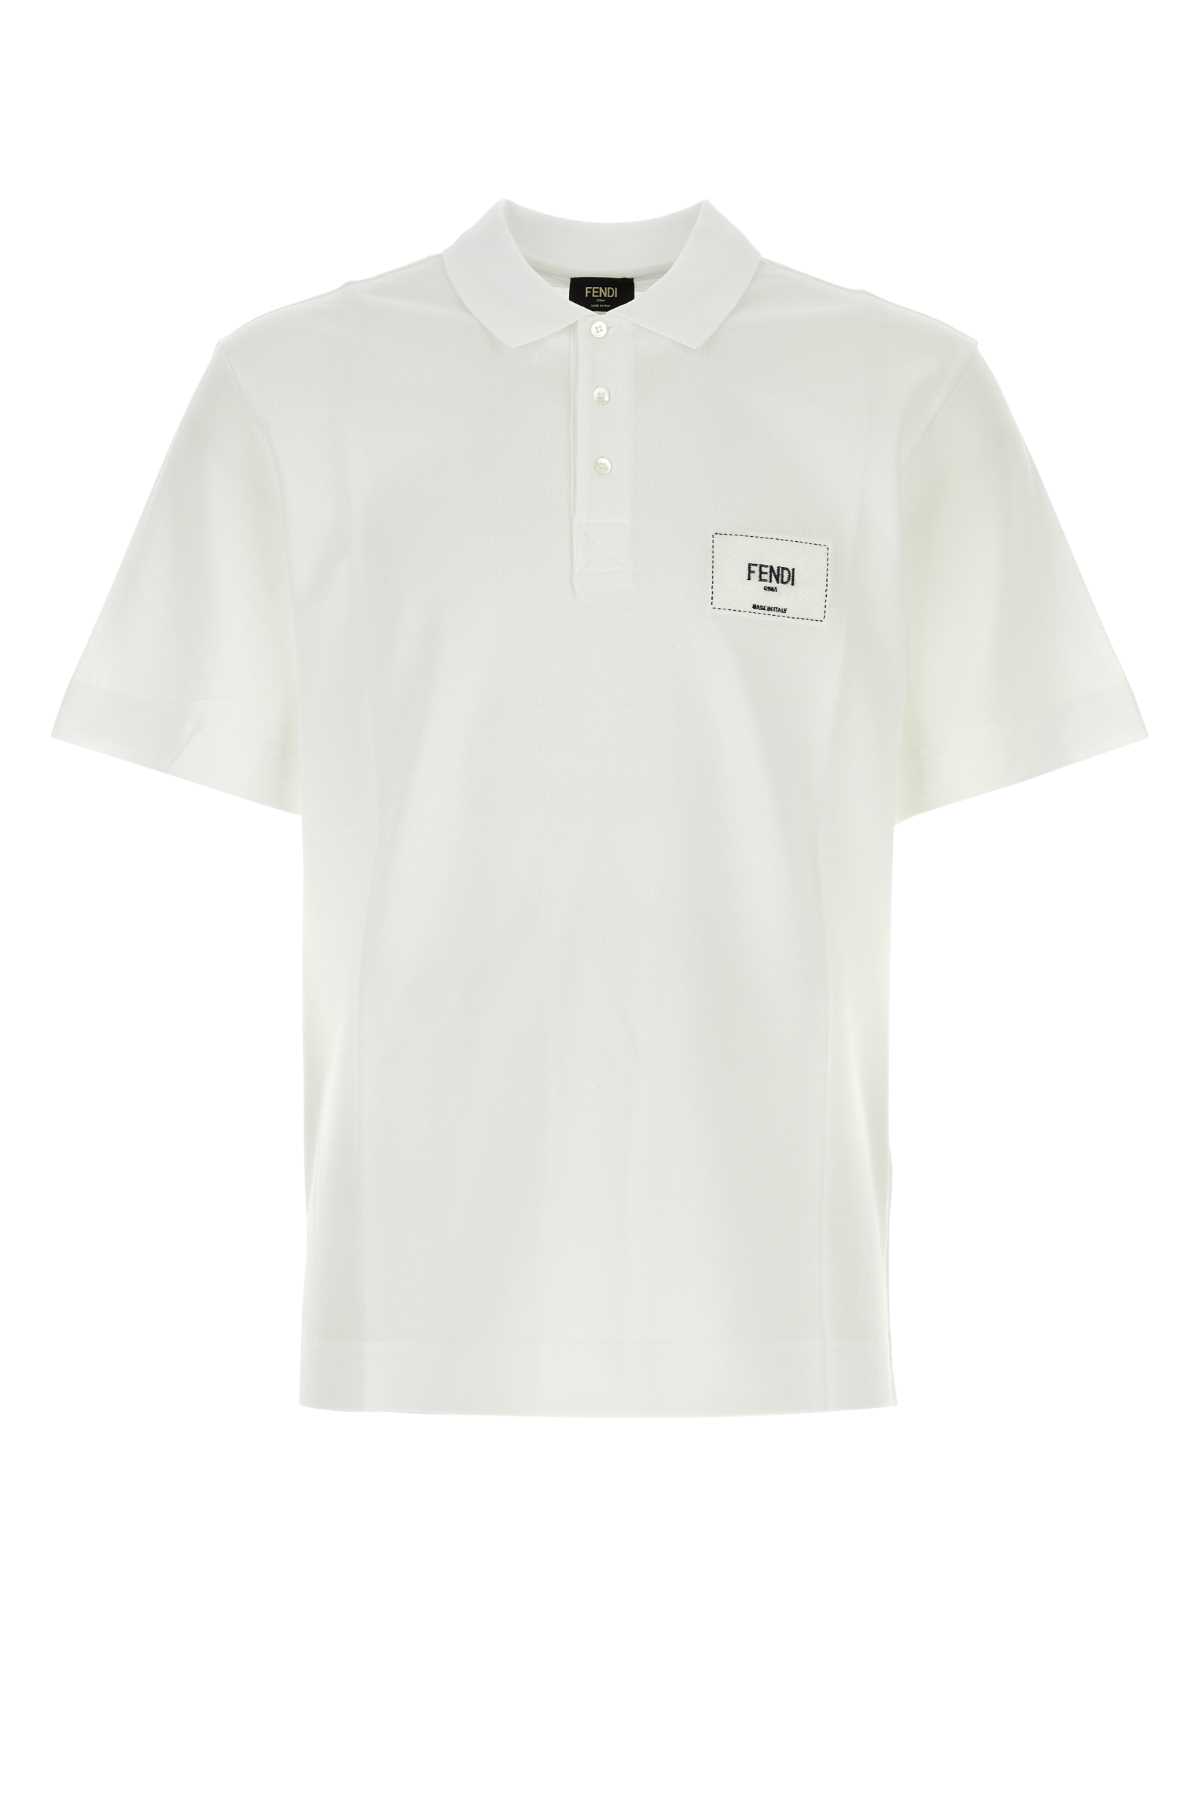 Shop Fendi White Piquet Polo Shirt